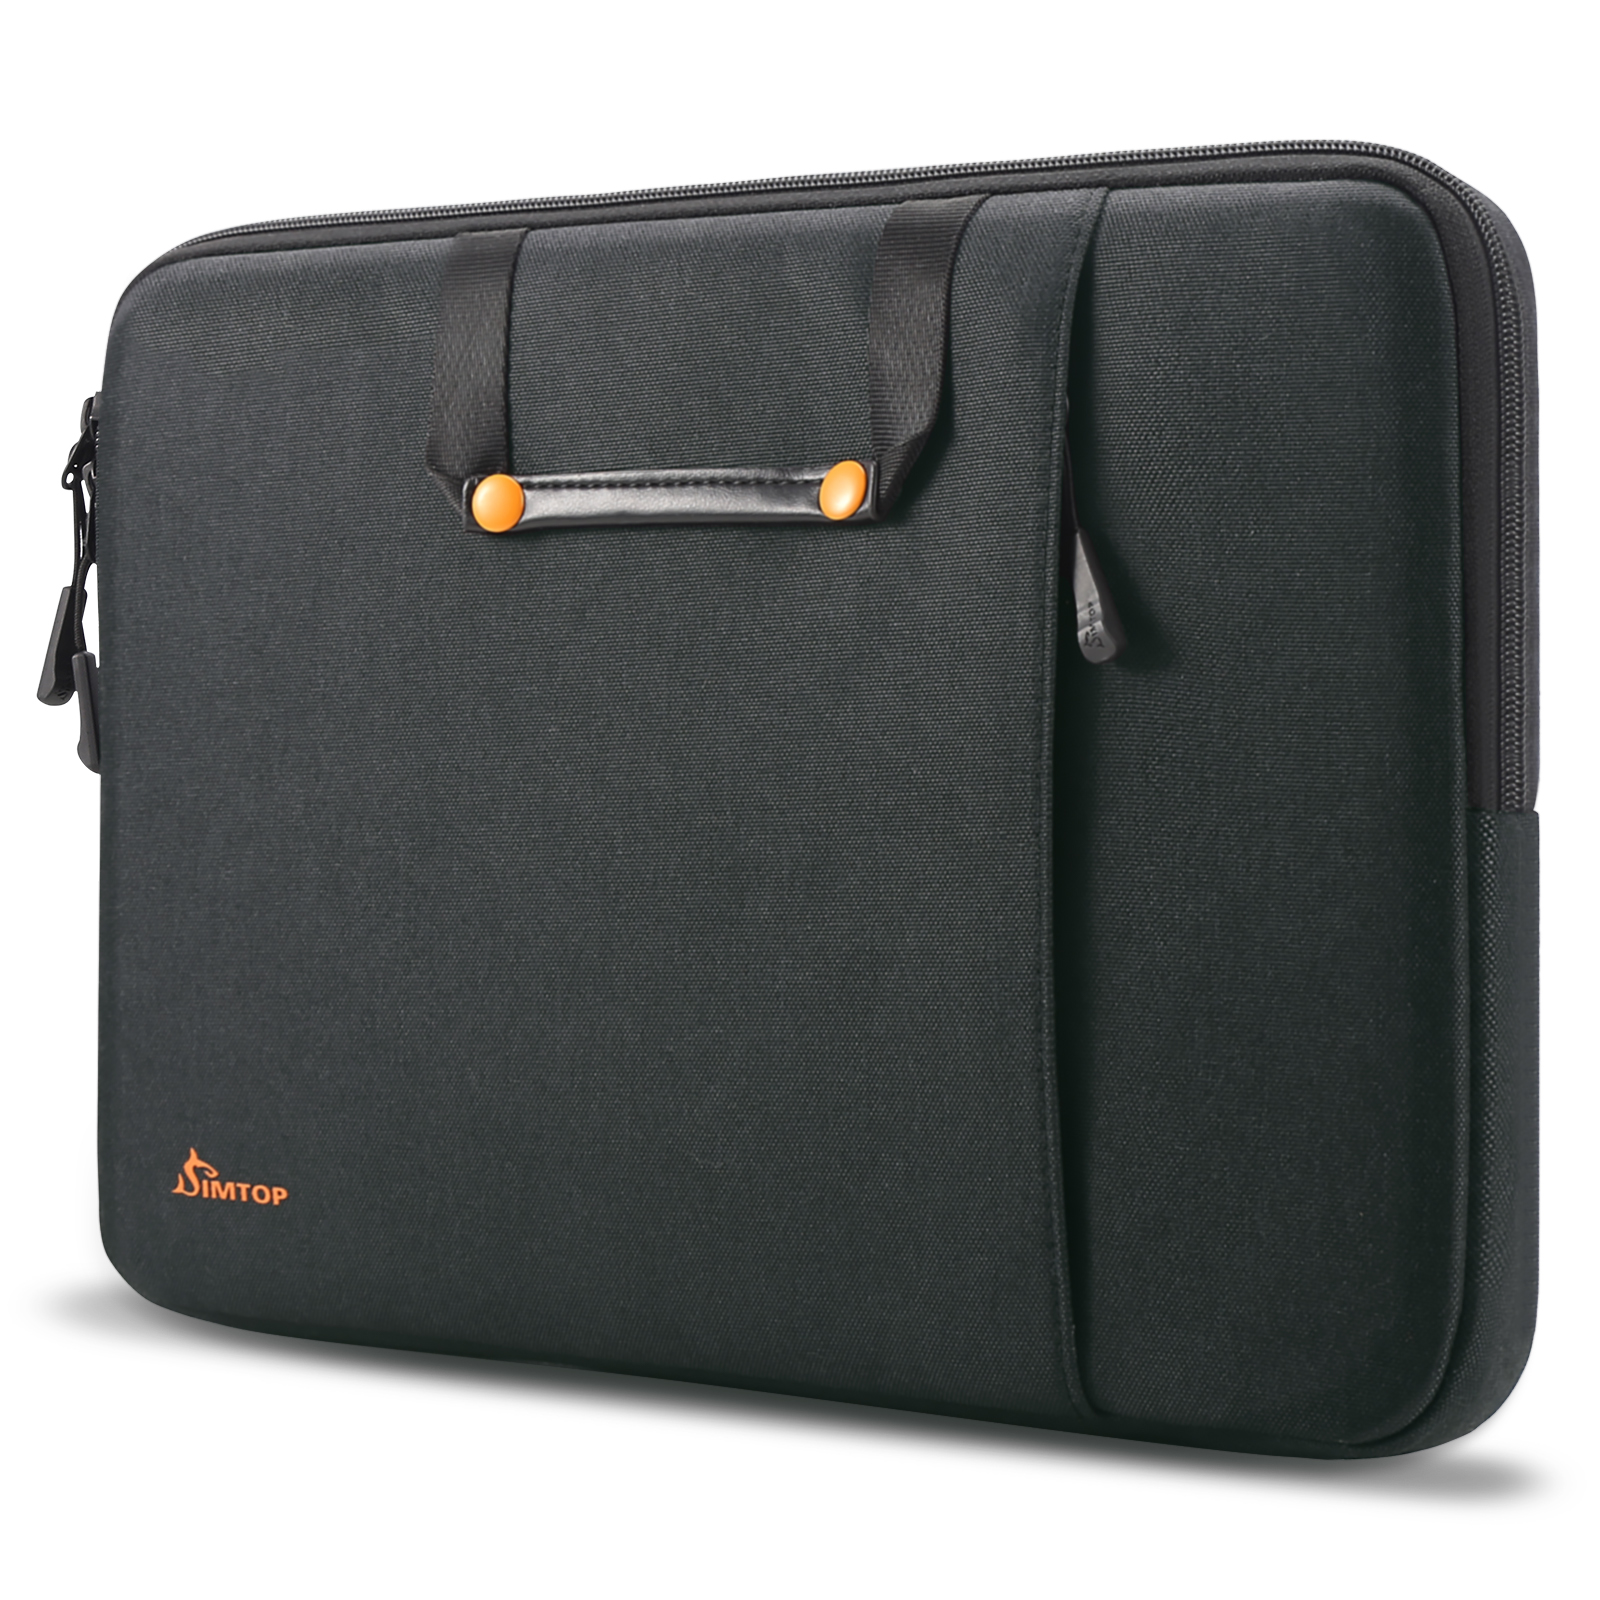 iCarryAlls Laptop Portfolio Organizer Case for Surface Book 2 /MacBook Pro 15 inch, MacBook Laptop Folio Case with Organizer Pocket, Black